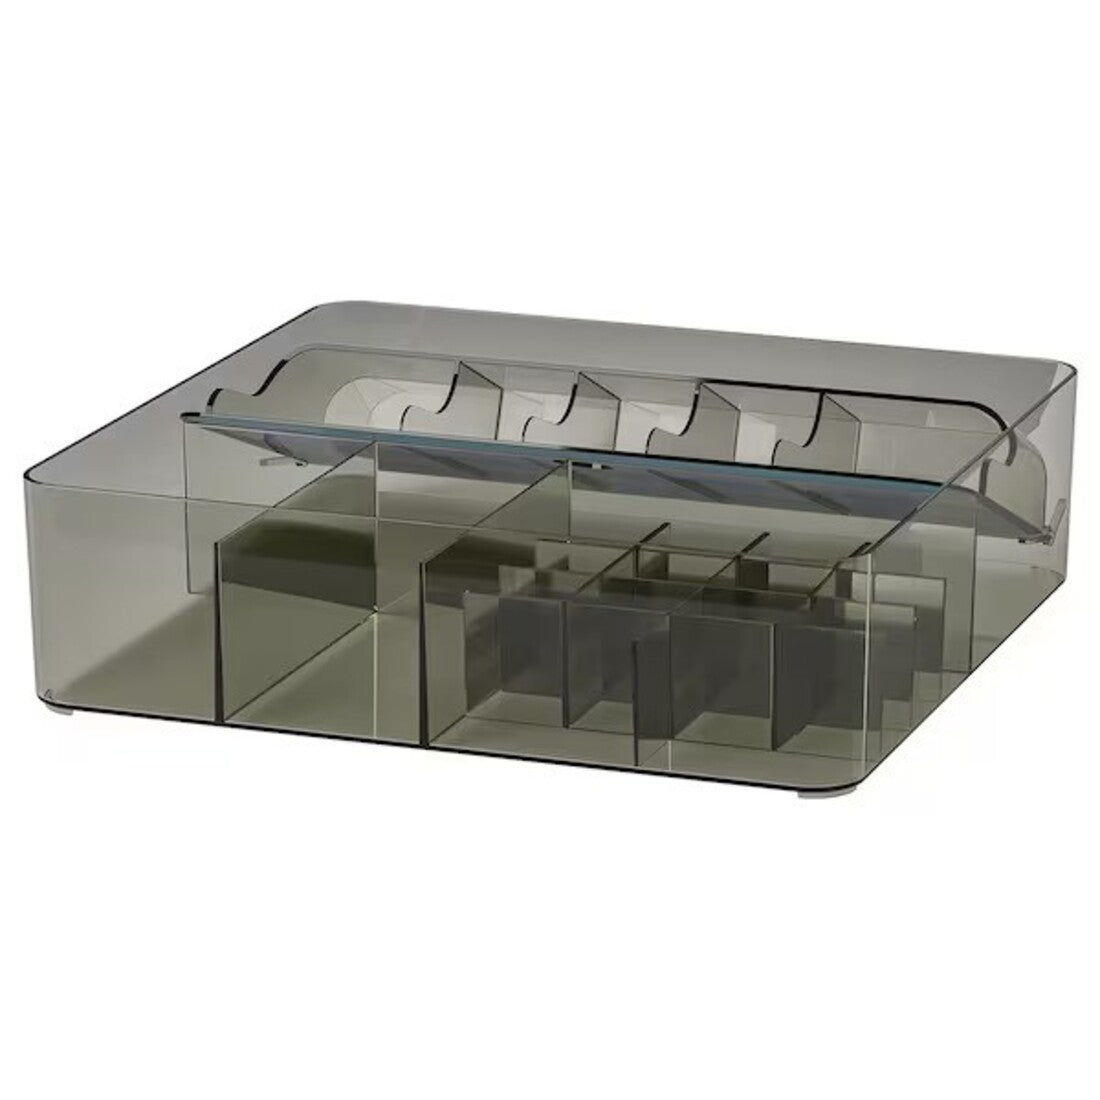 IKEA VISSLAÅN Box with compartments, grey, 32x31x9 cm (12 ¾x12 ¼x3